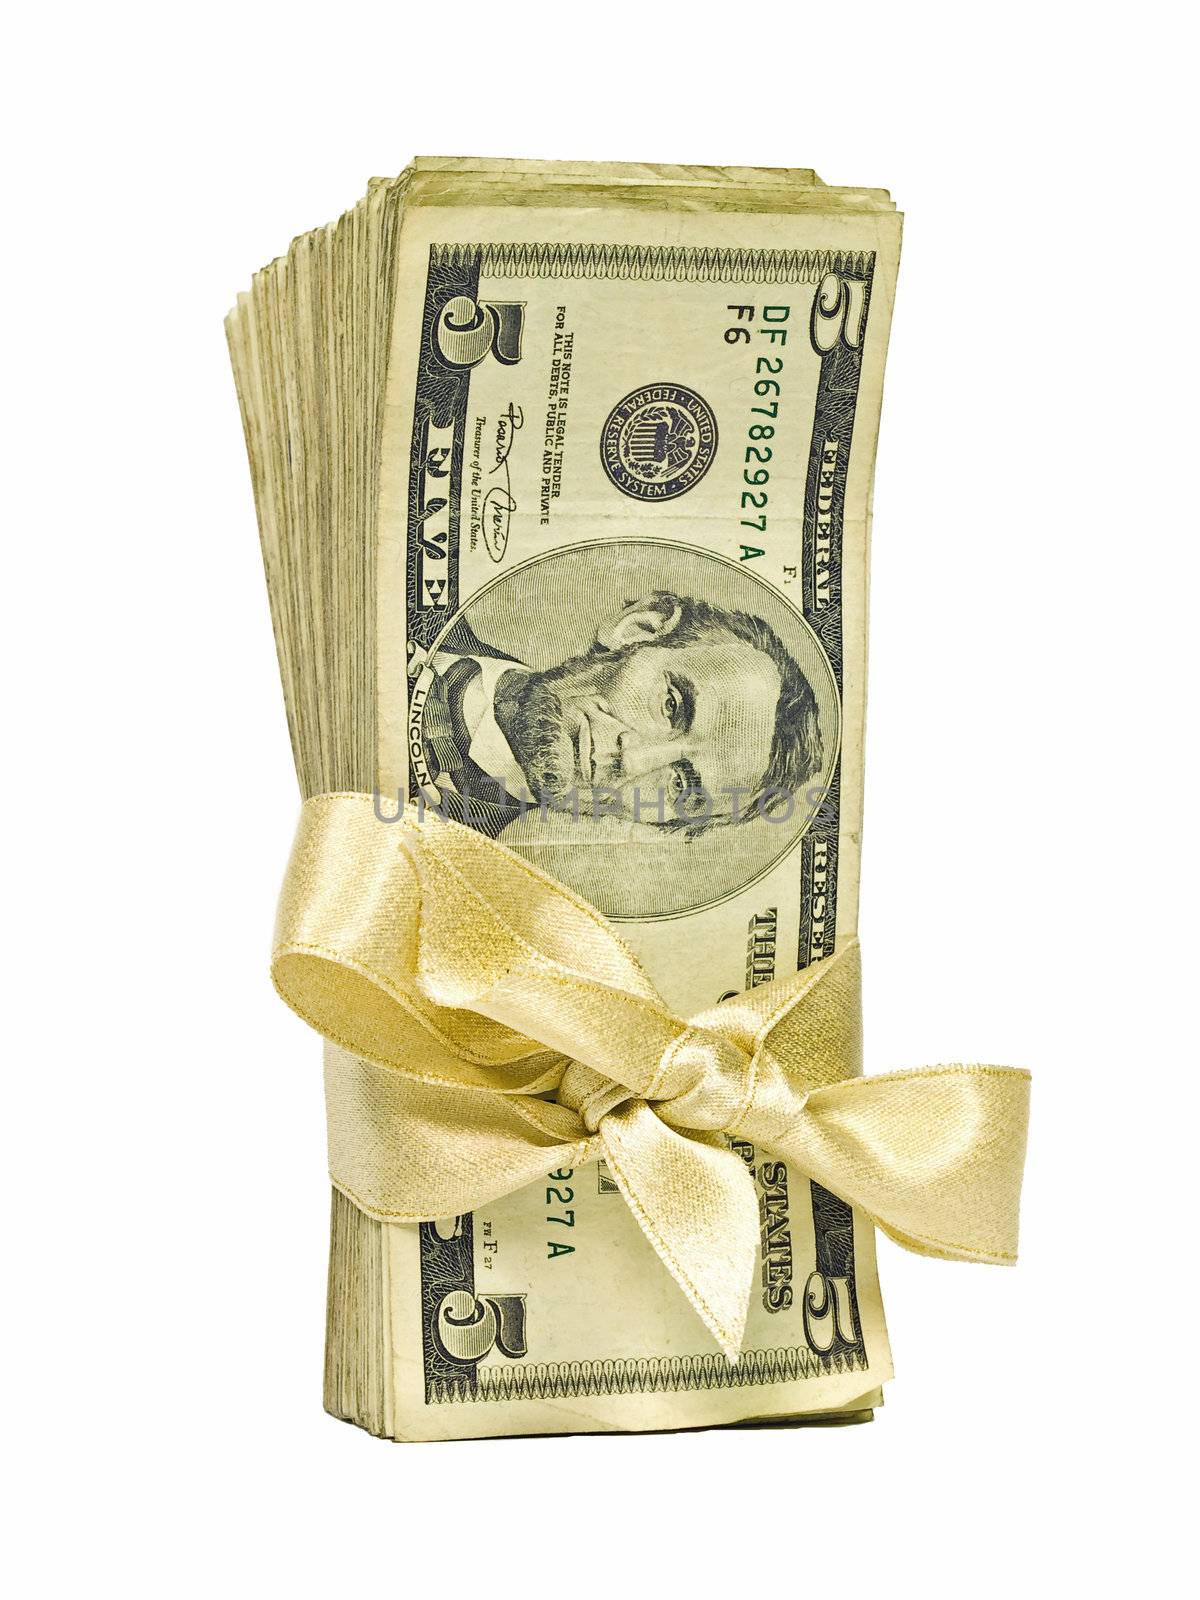 Money Bundle in a Gold Ribbon $5 Bills